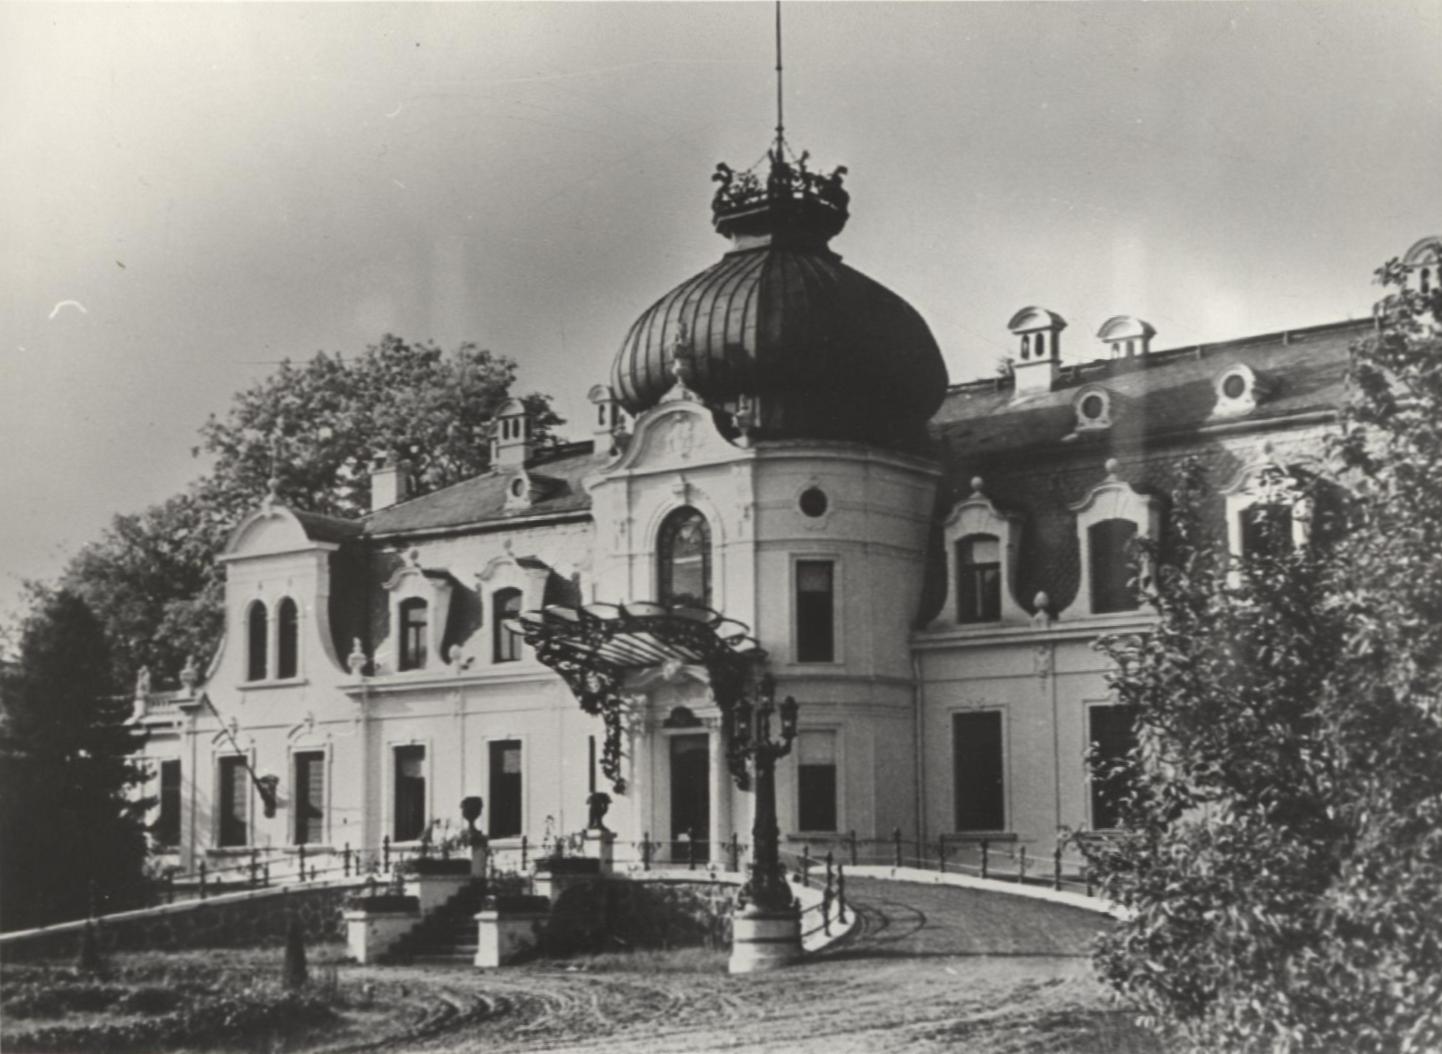 Schloss Blücherhof in Mecklenburg, SDEI Archiv, Pslg 4642.